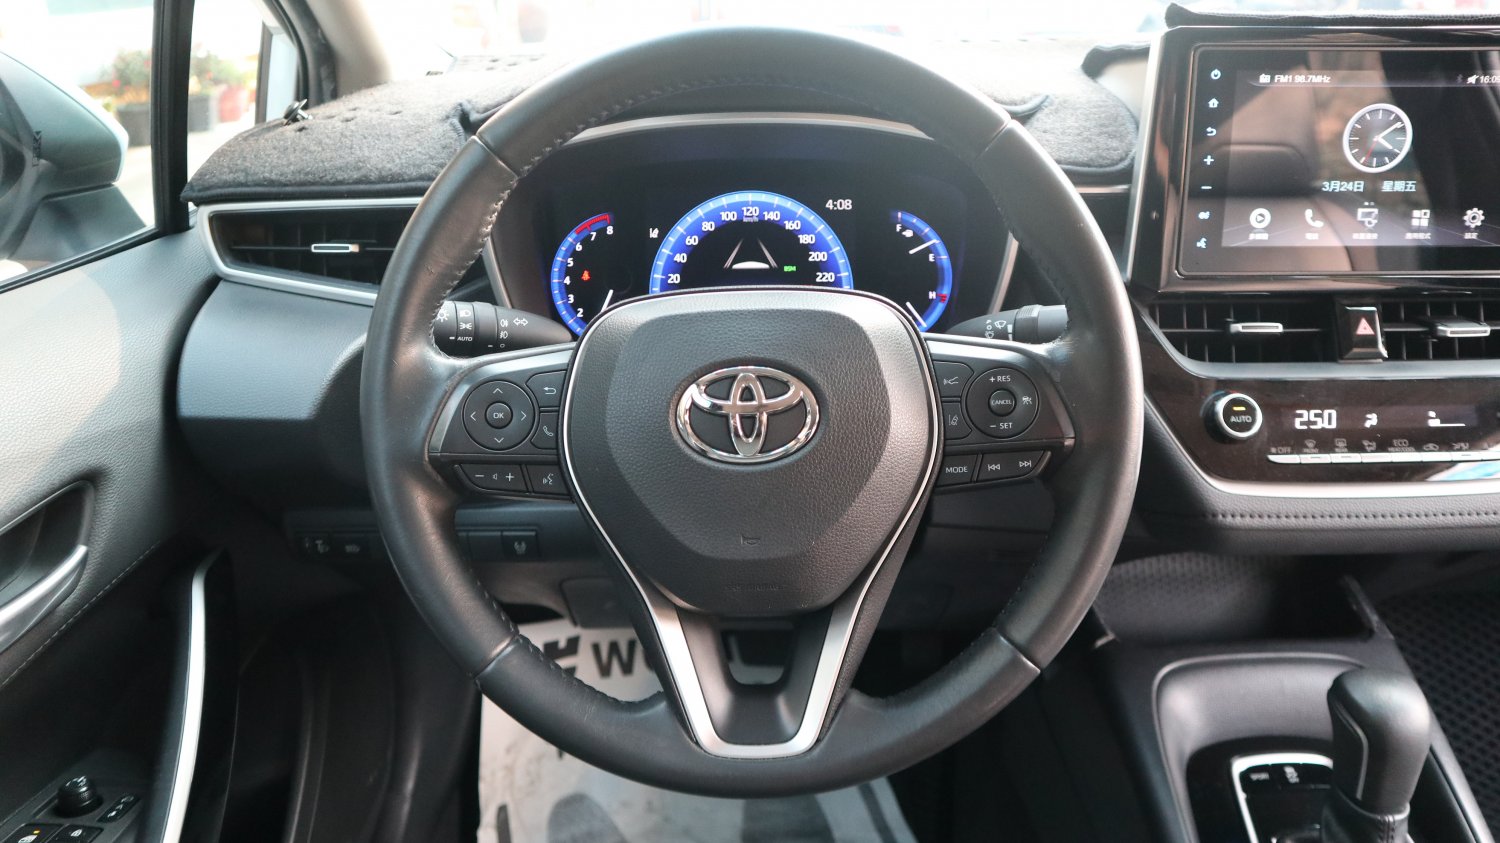 Toyota 豐田 ／ Altis ／ 2019年 ／ 2019年Toyota Altis 白色 豐田中古車 ／ 成交區